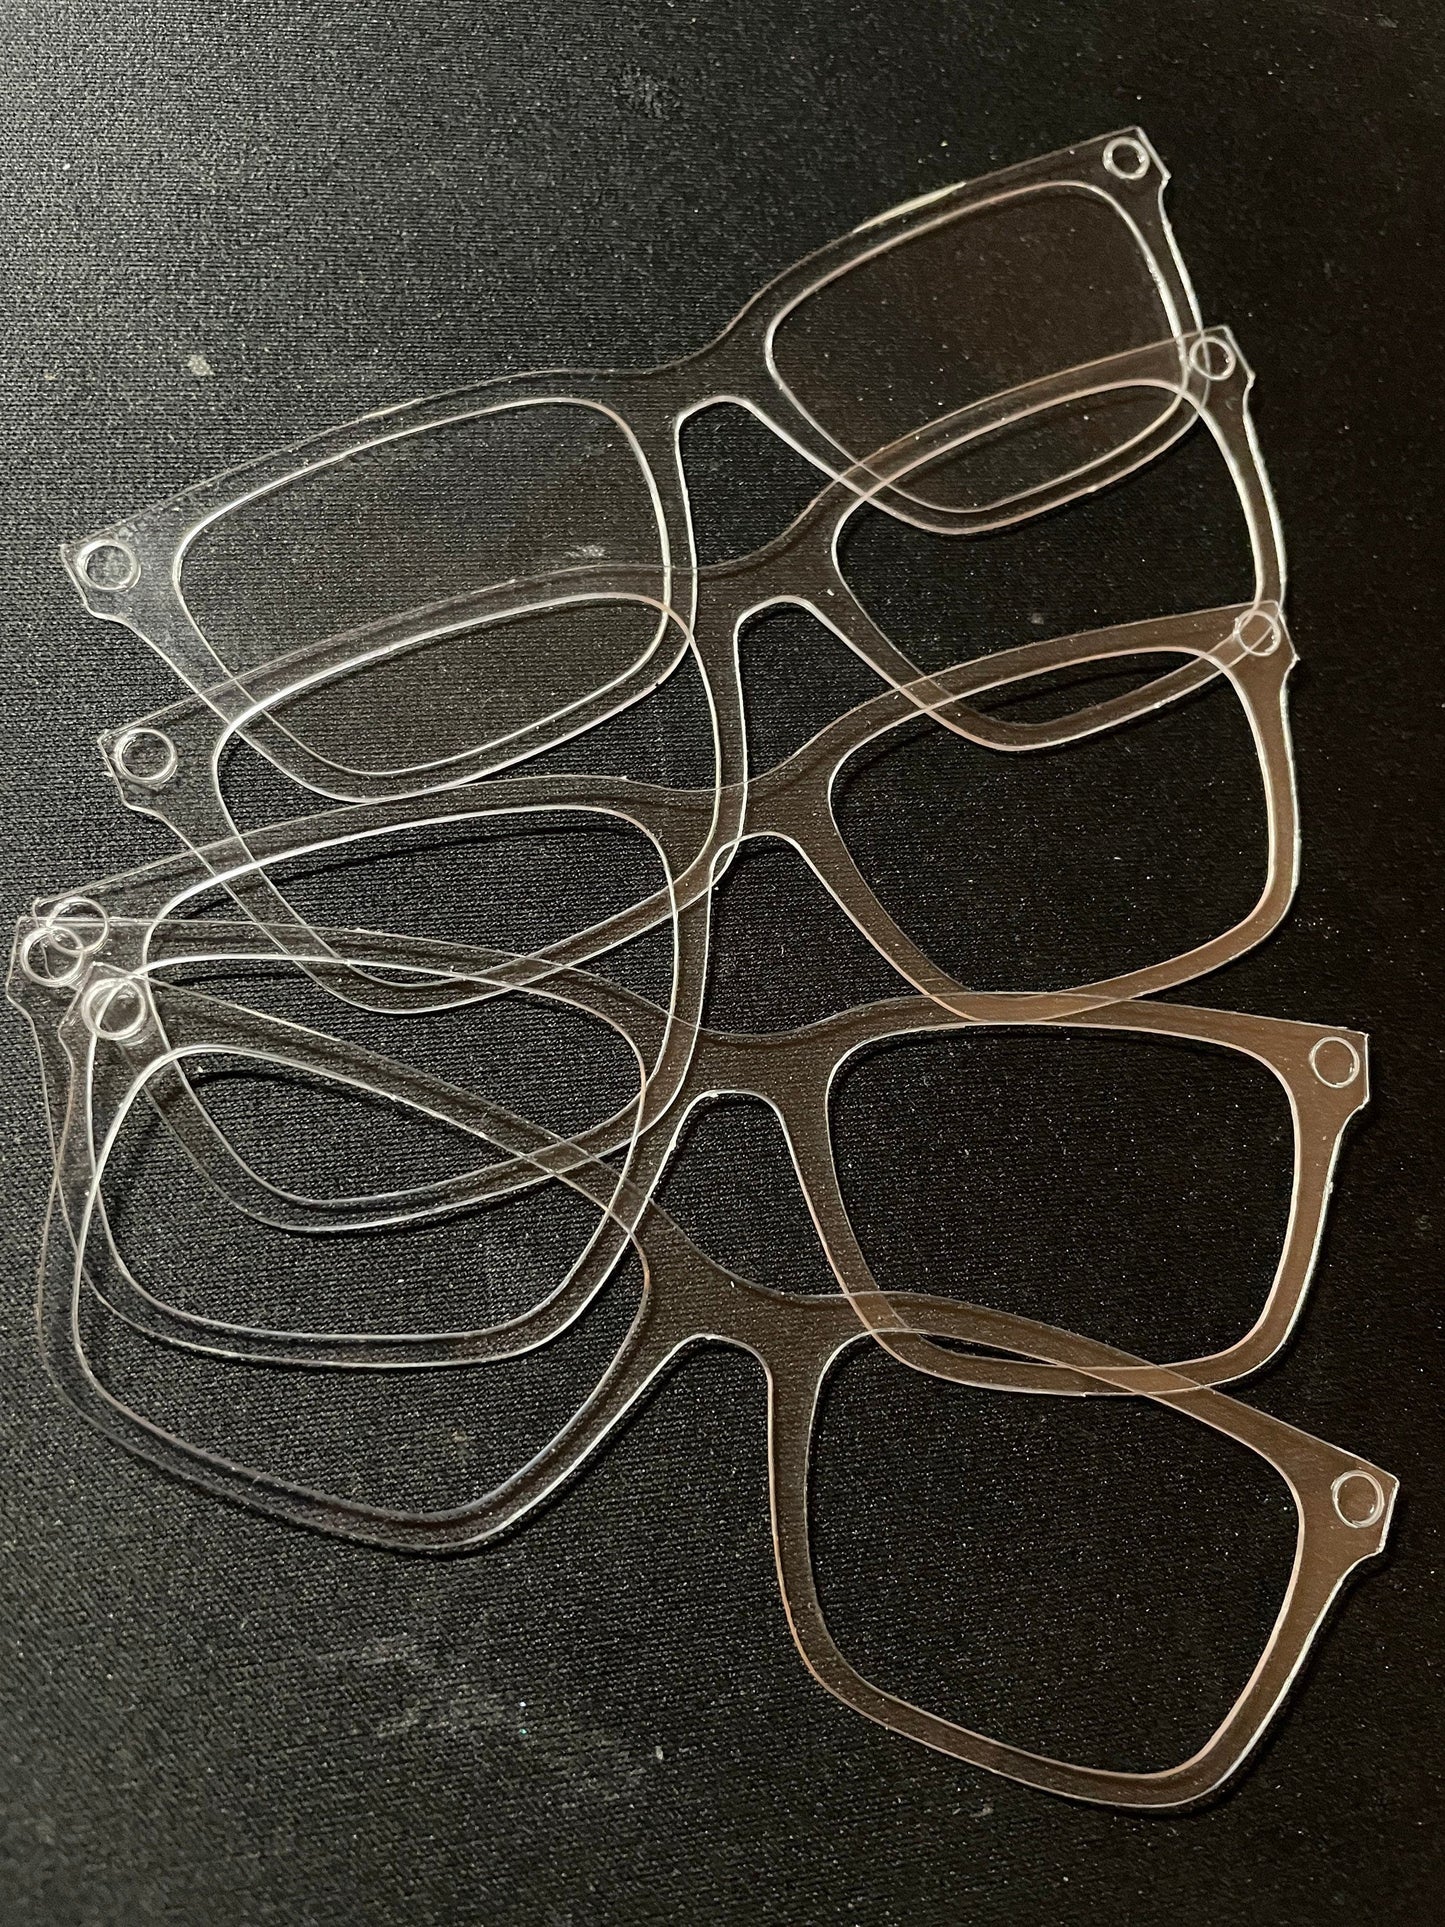 10 blank glasses topper -  Cedro blanks, Otero blanks, pair eyeglasses, magnetic topper, pair glasses, blanks, acrylic blank